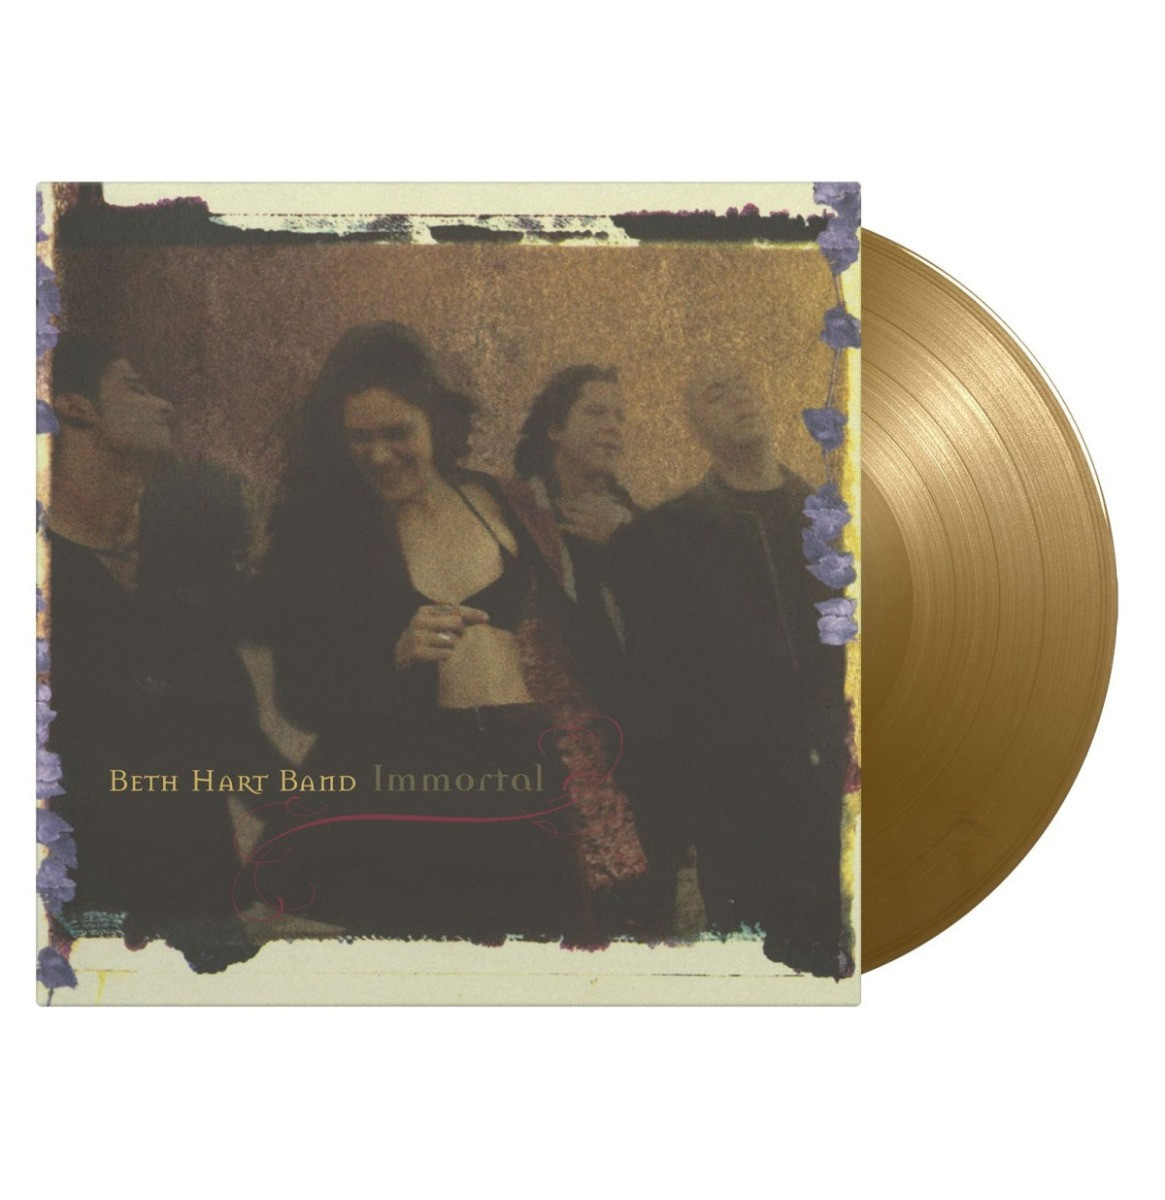 Beth Hart Band - Immortal (Goud Vinyl) LP